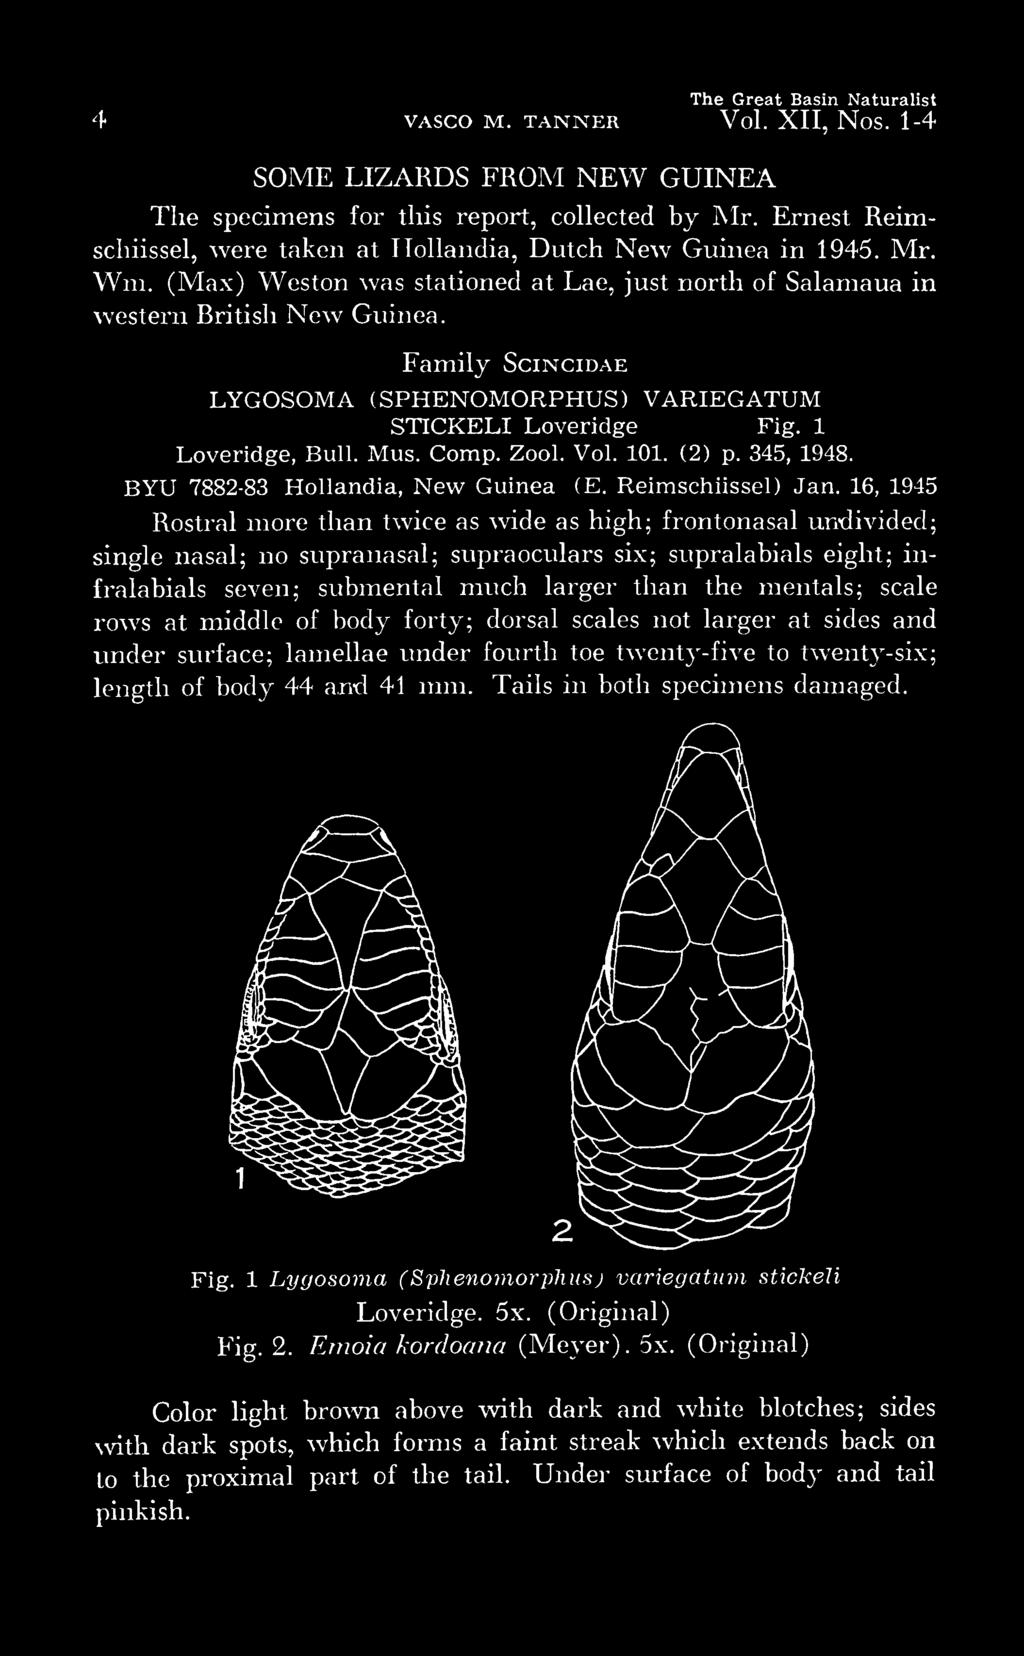 Family Scincidae LYGOSOMA (SPHENOMORPHUS) VARIEGATUM STICKELI Loveridge Fig. 1 Loveridge, Bull. Mus. Comp. Zool. Vol. 101. (2) p. 345, 1948. BYU 7882-83 Hollandia, New Guinea (E. Reimschiissel) Jan.